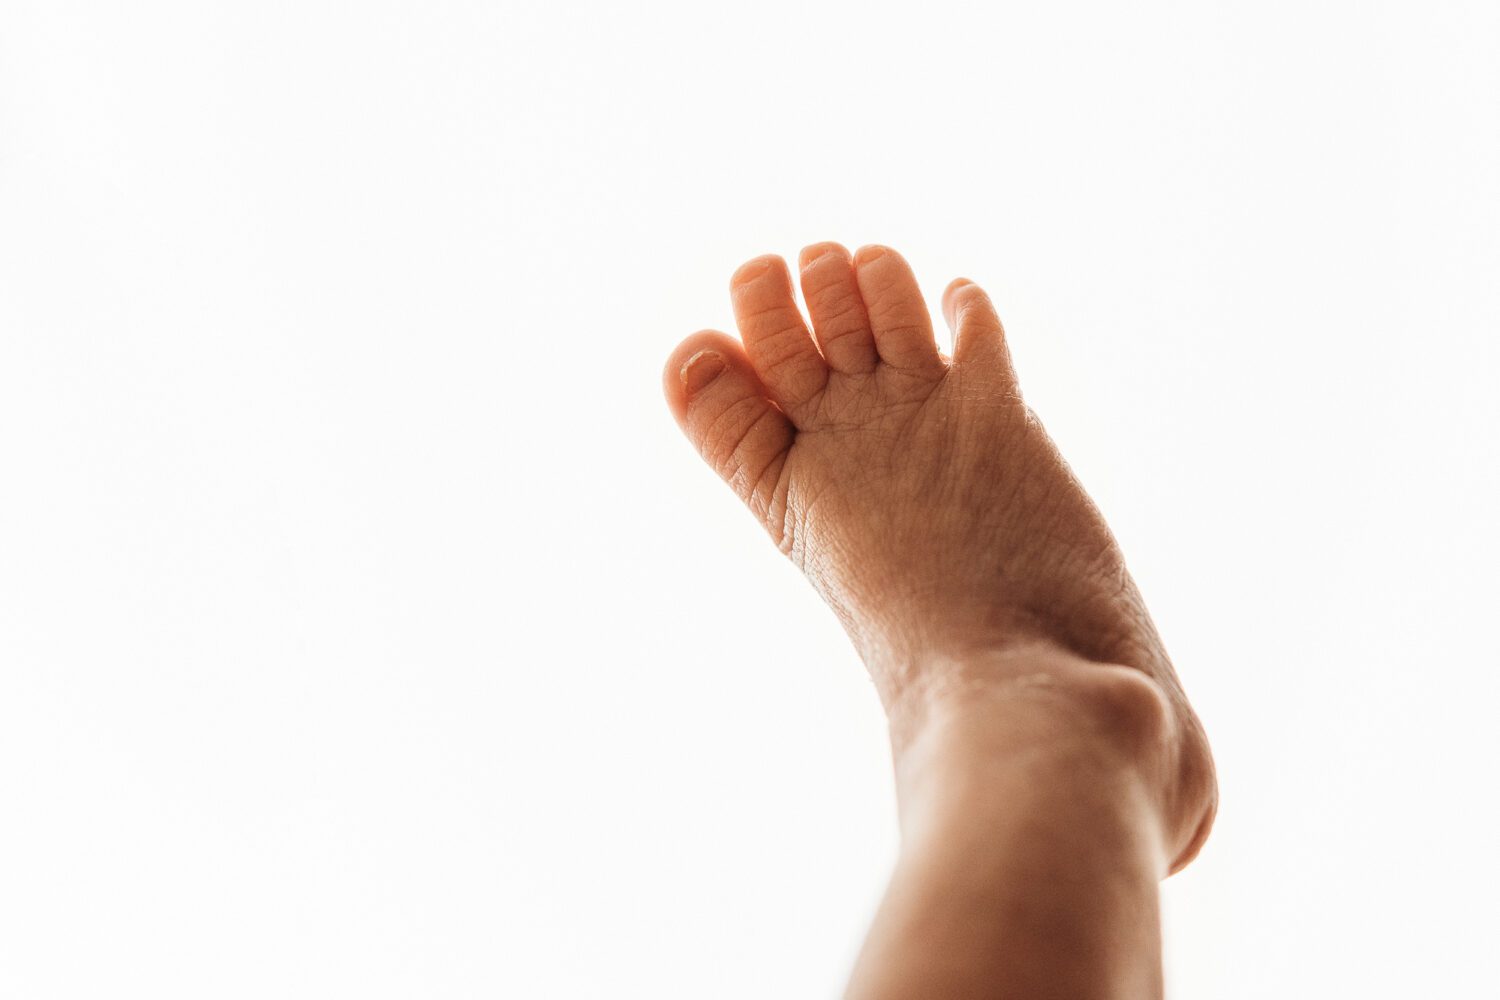 Säuglingsfuss in Nahaufnahme so das man die feinen Linien sieht